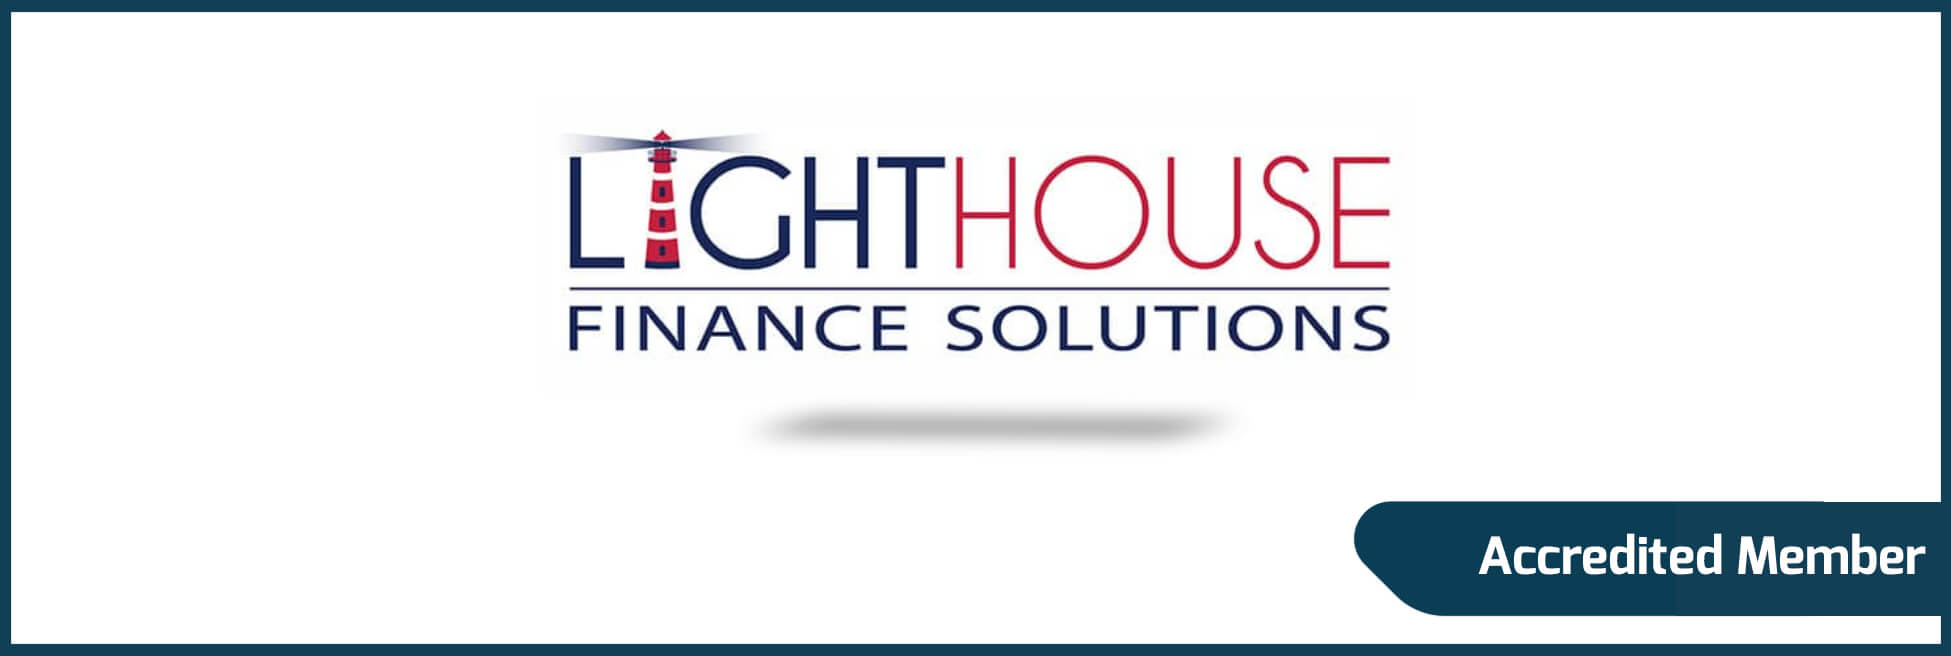 Lighthouse FinanceSolutions